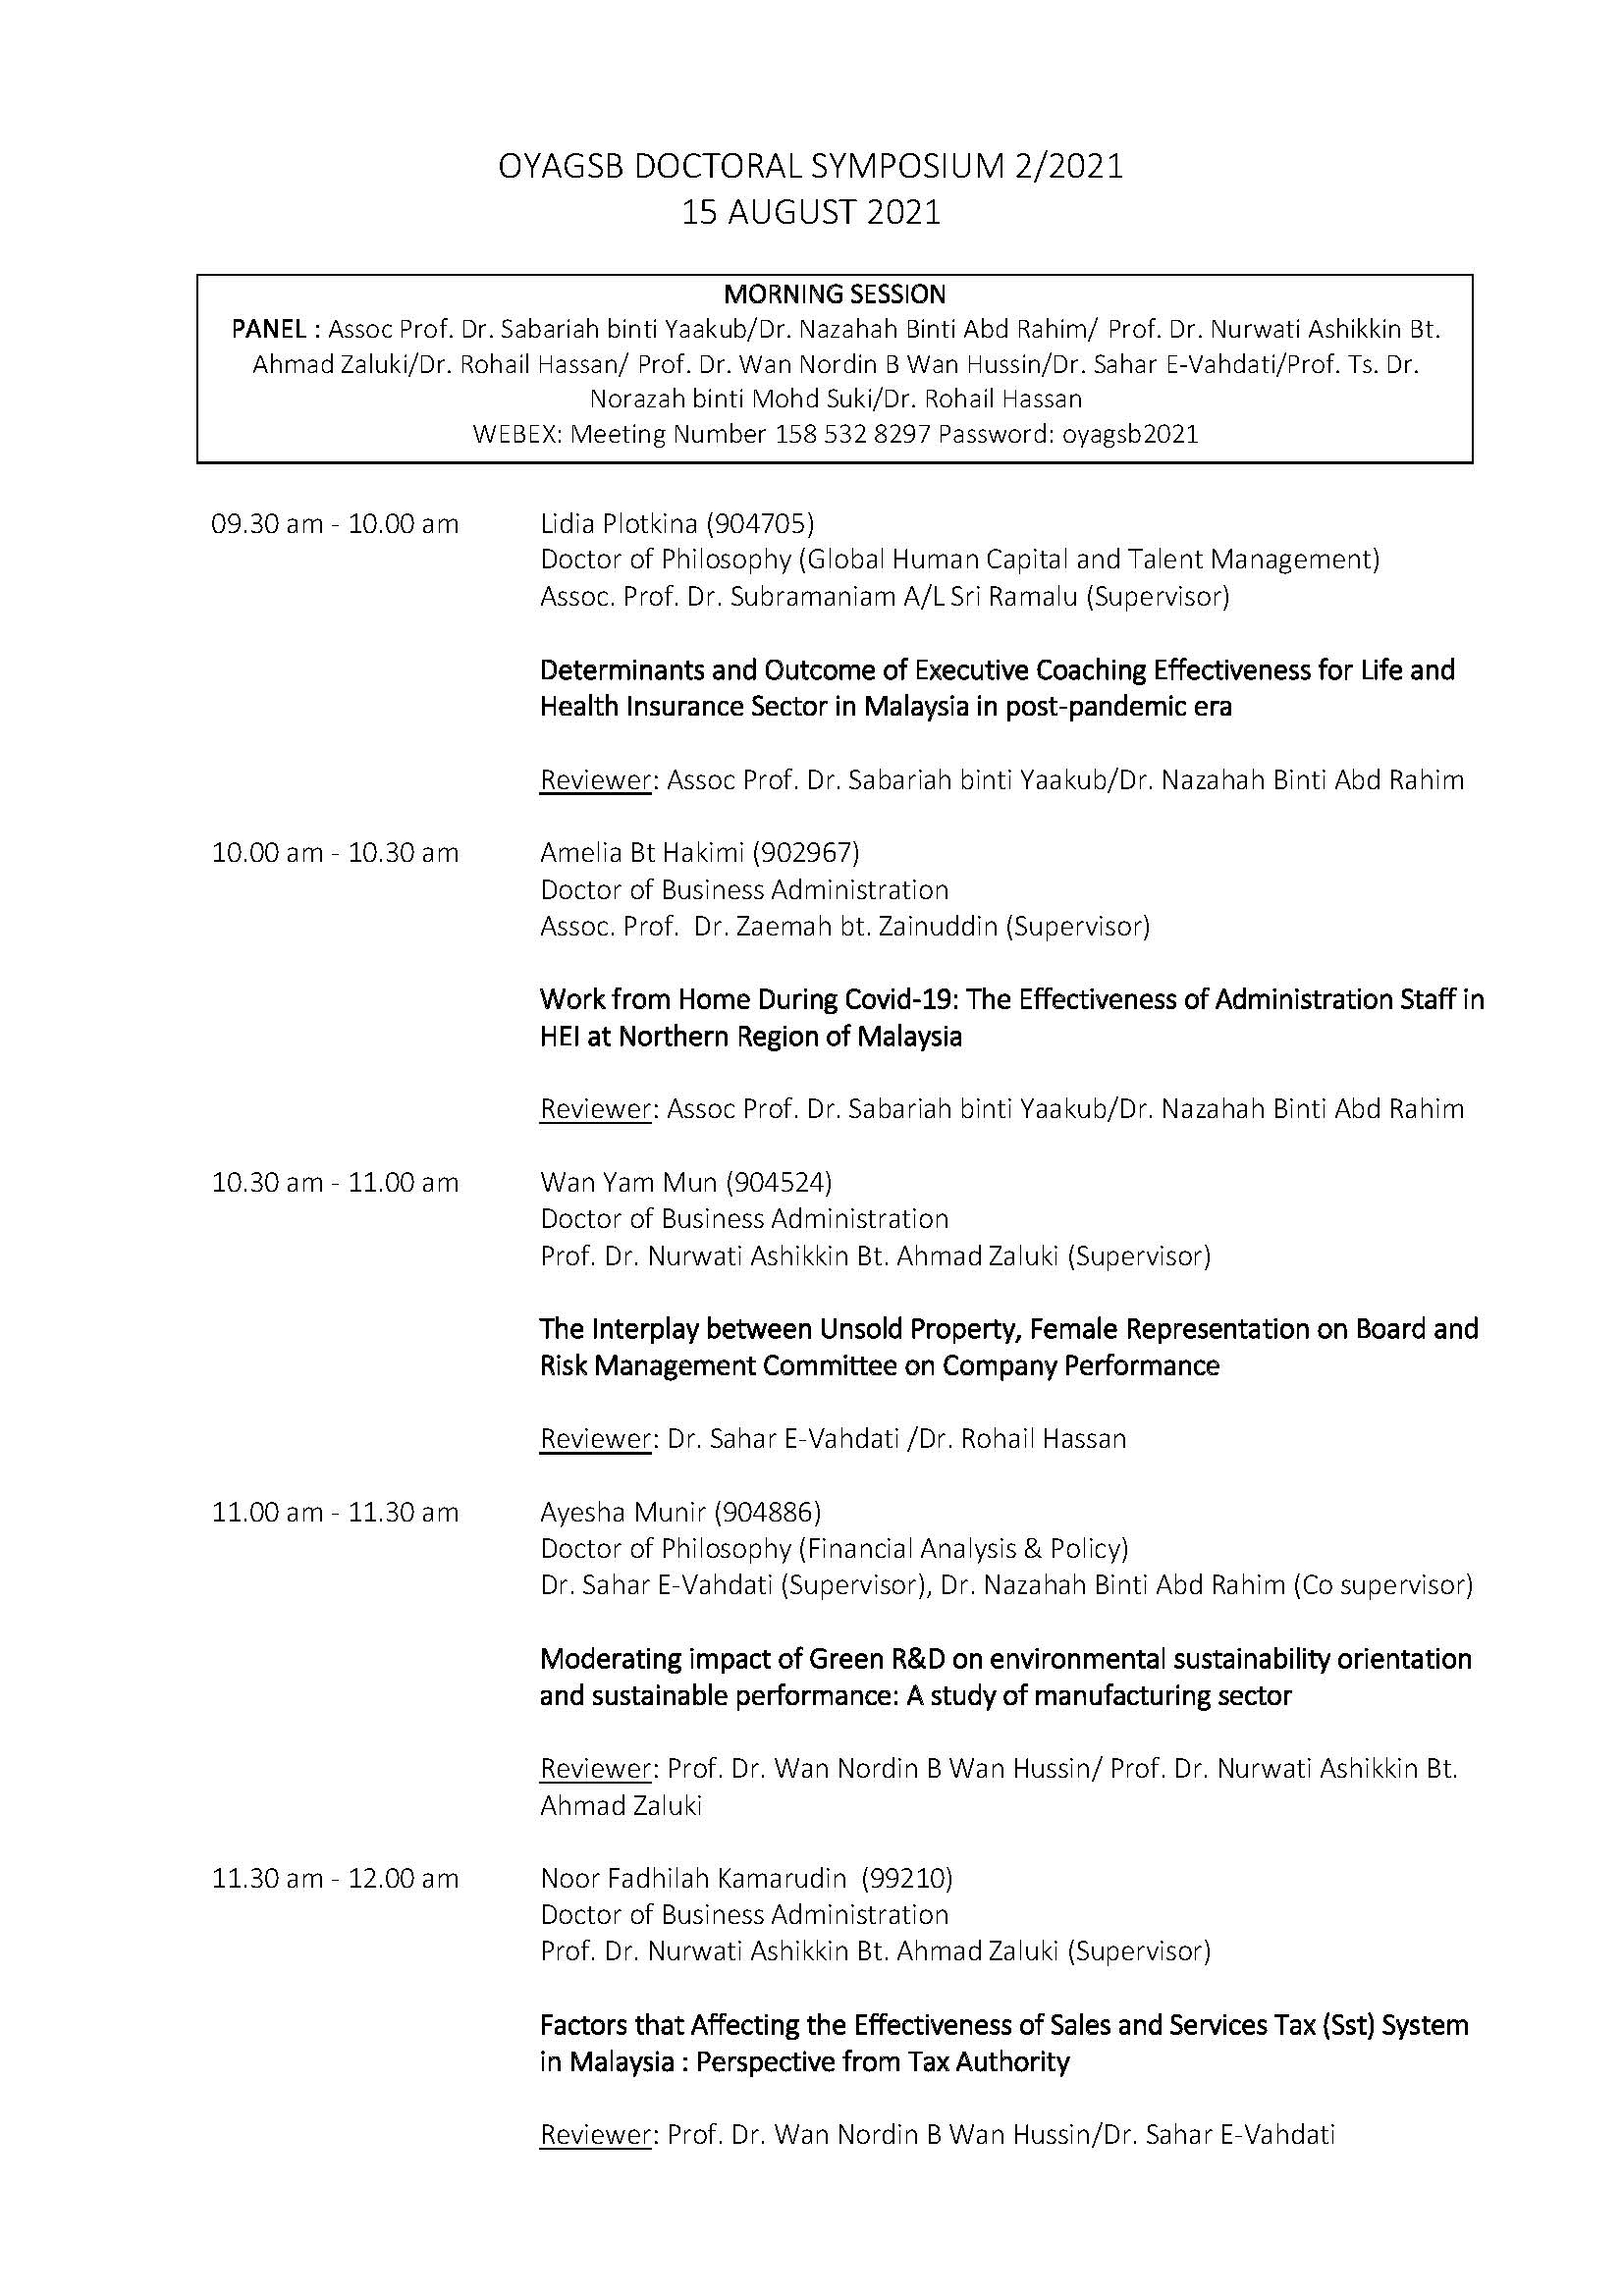 aug-2021-1-oyagsb_doctoral_symposium_3_page_1